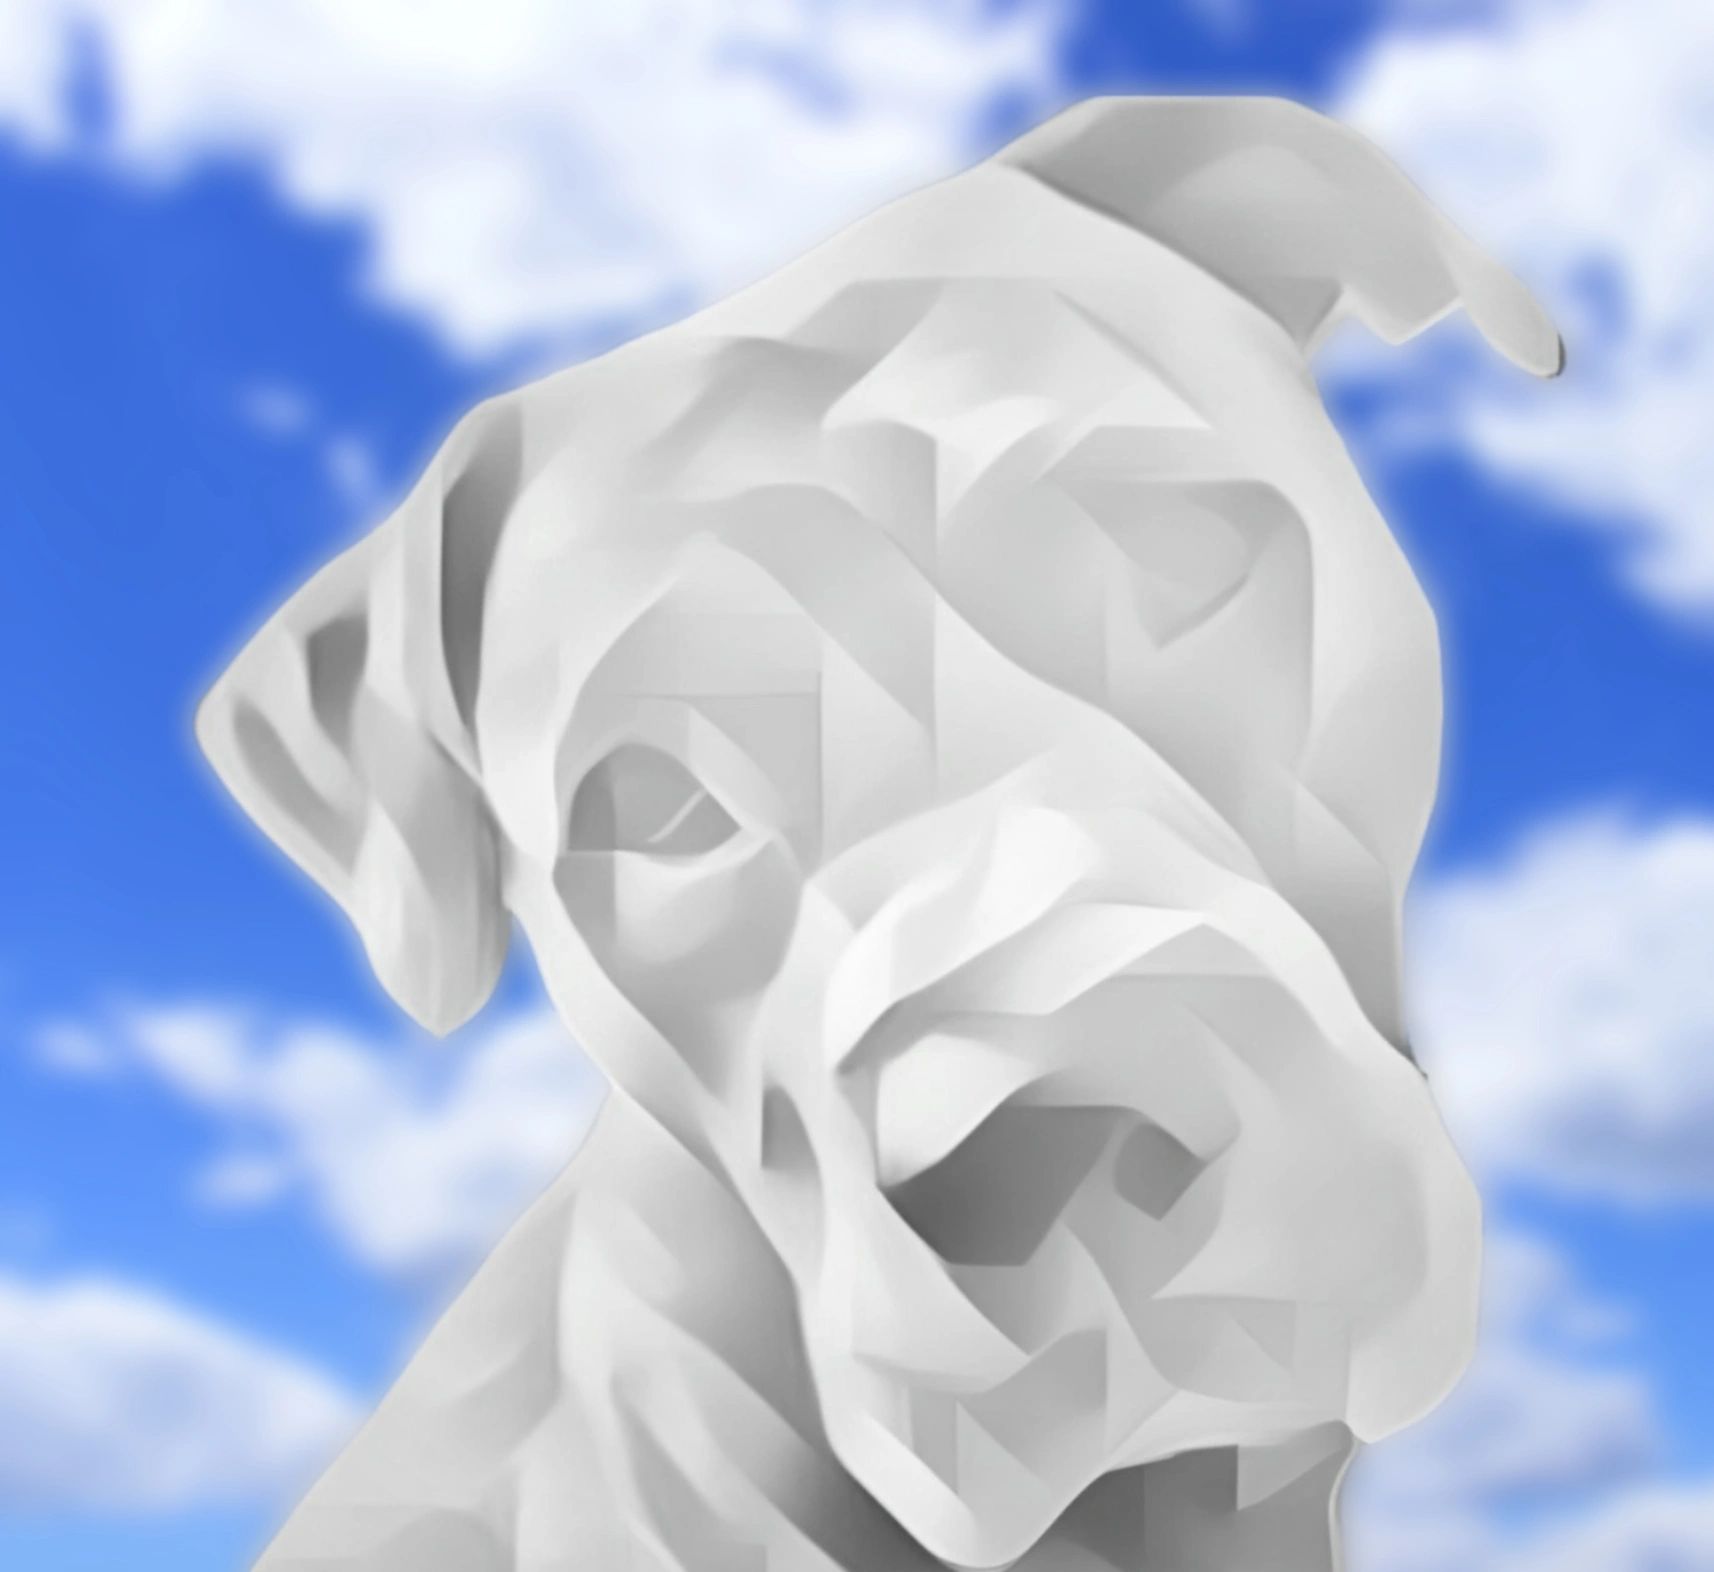 Buddy the cloud dog